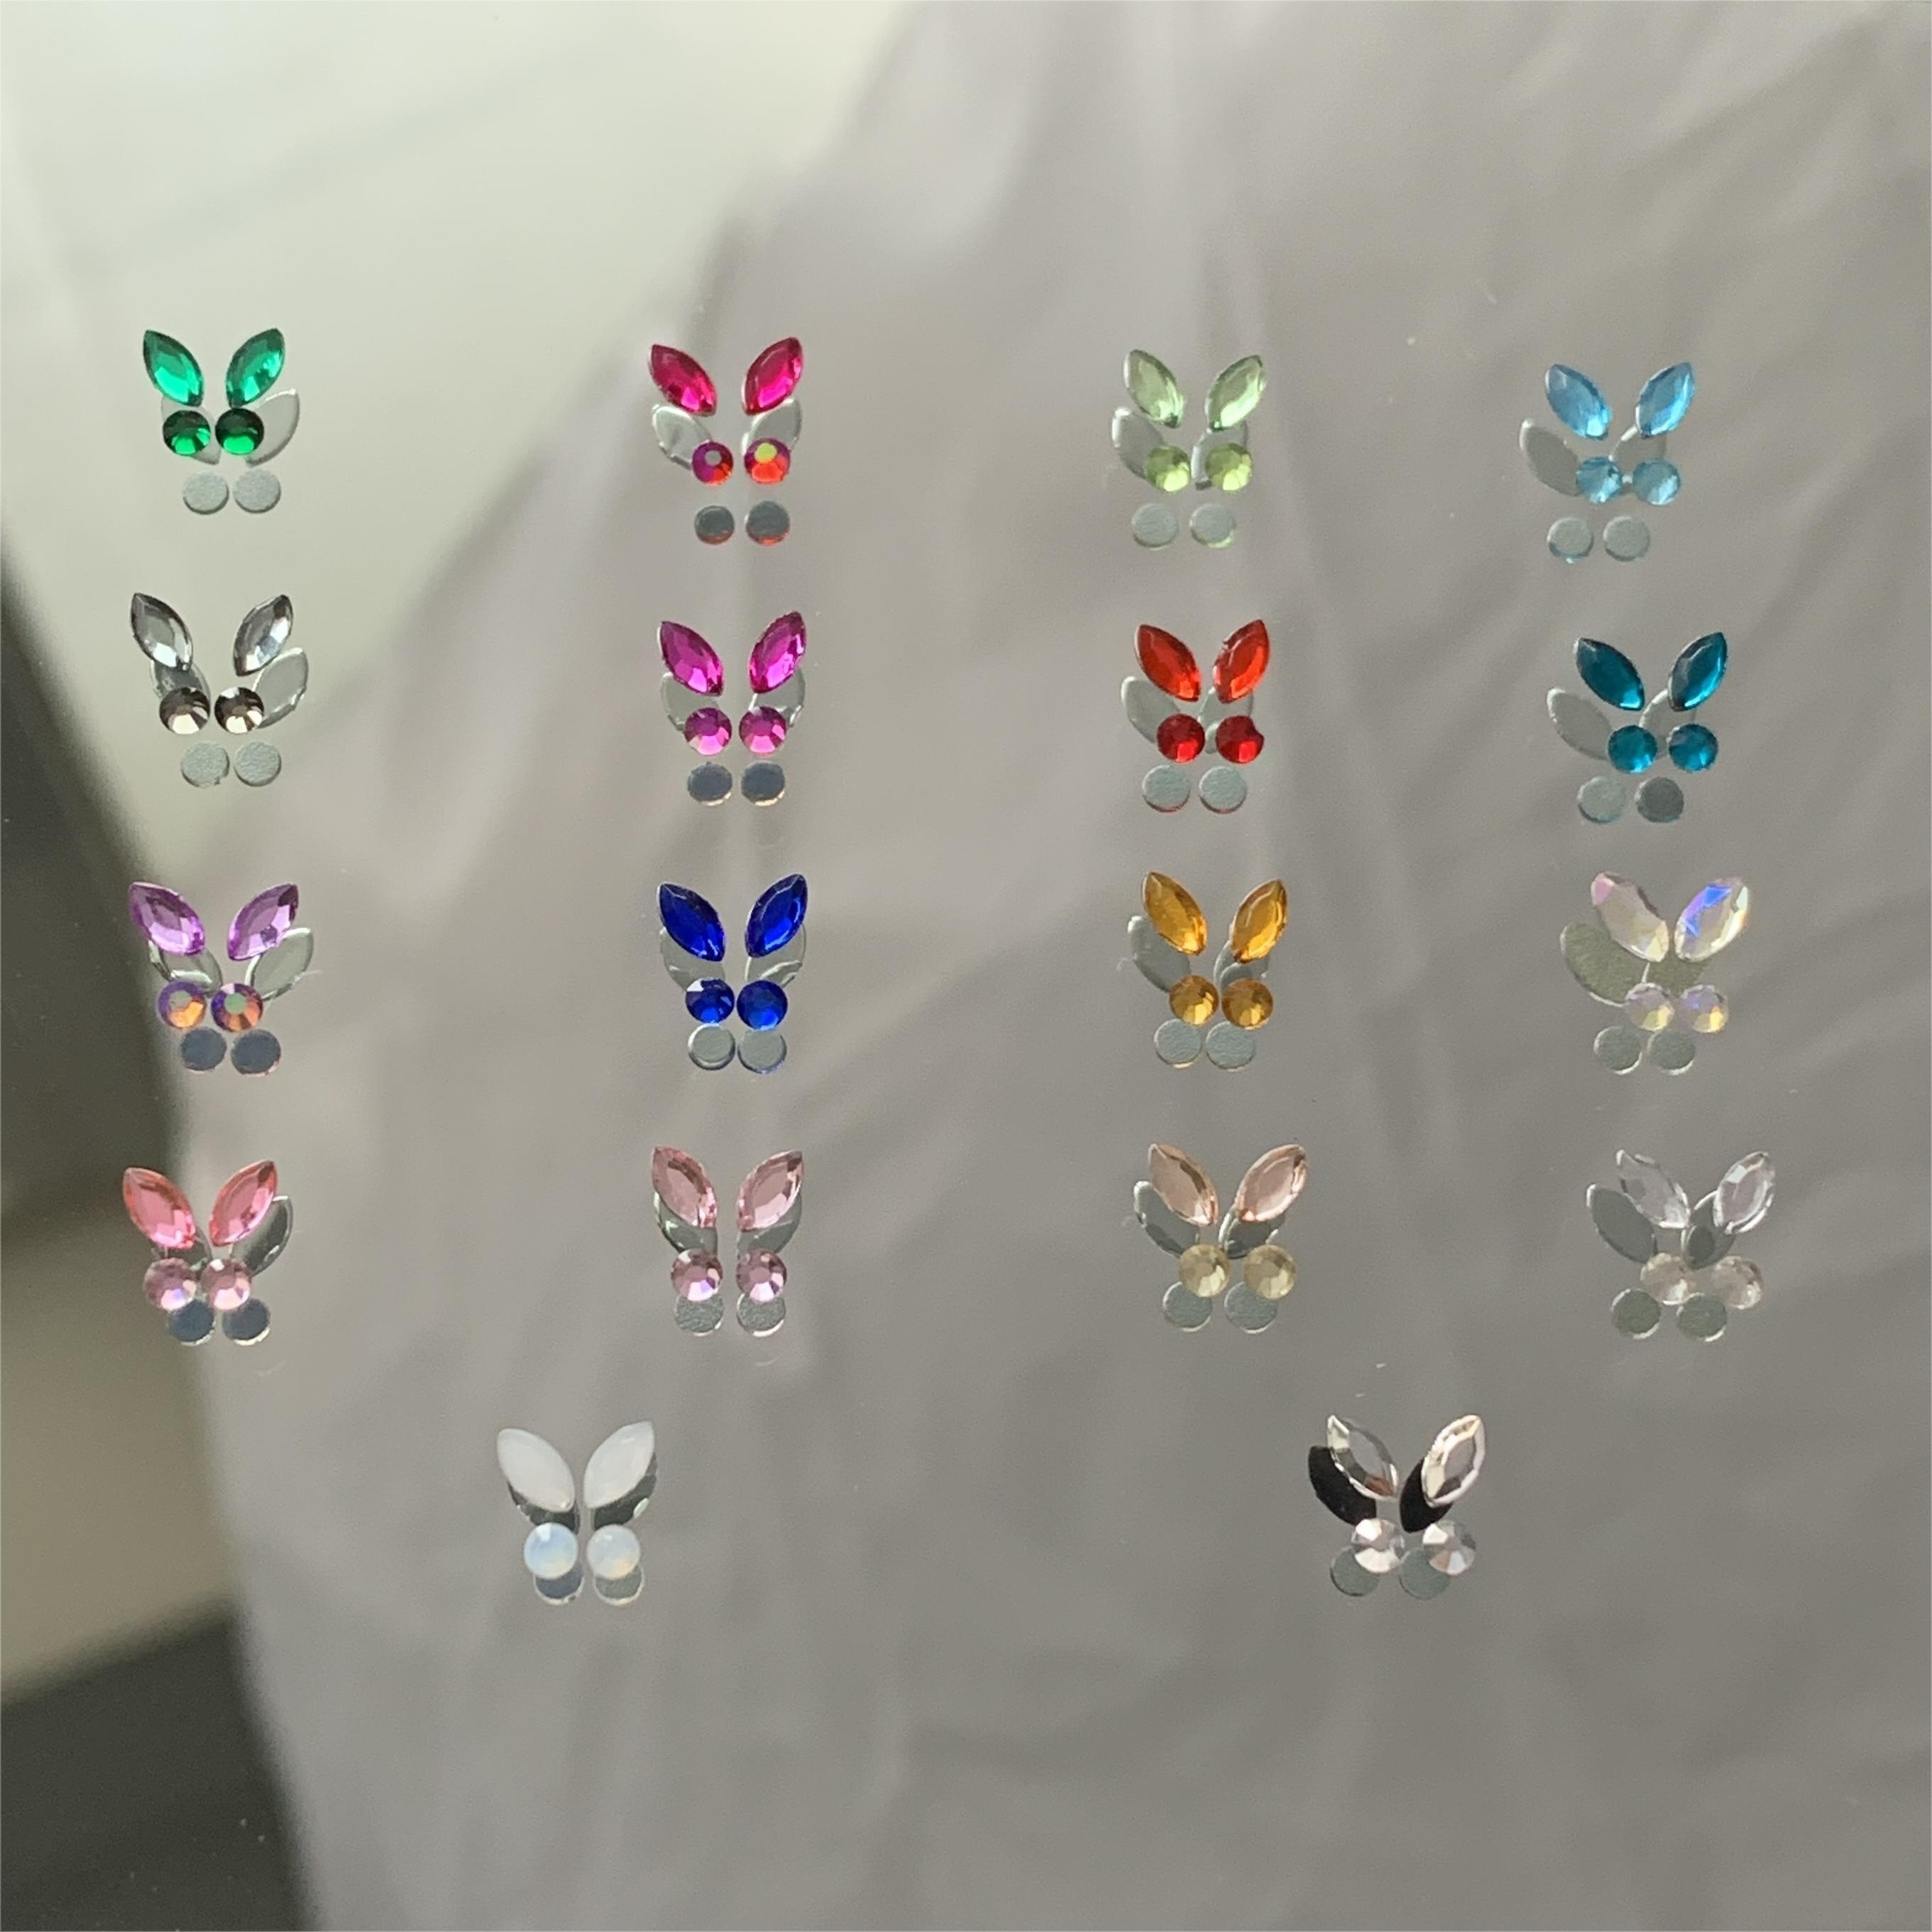 DIY Tooth Gem Kit (Butterfly Effect Set) – TweezerCo